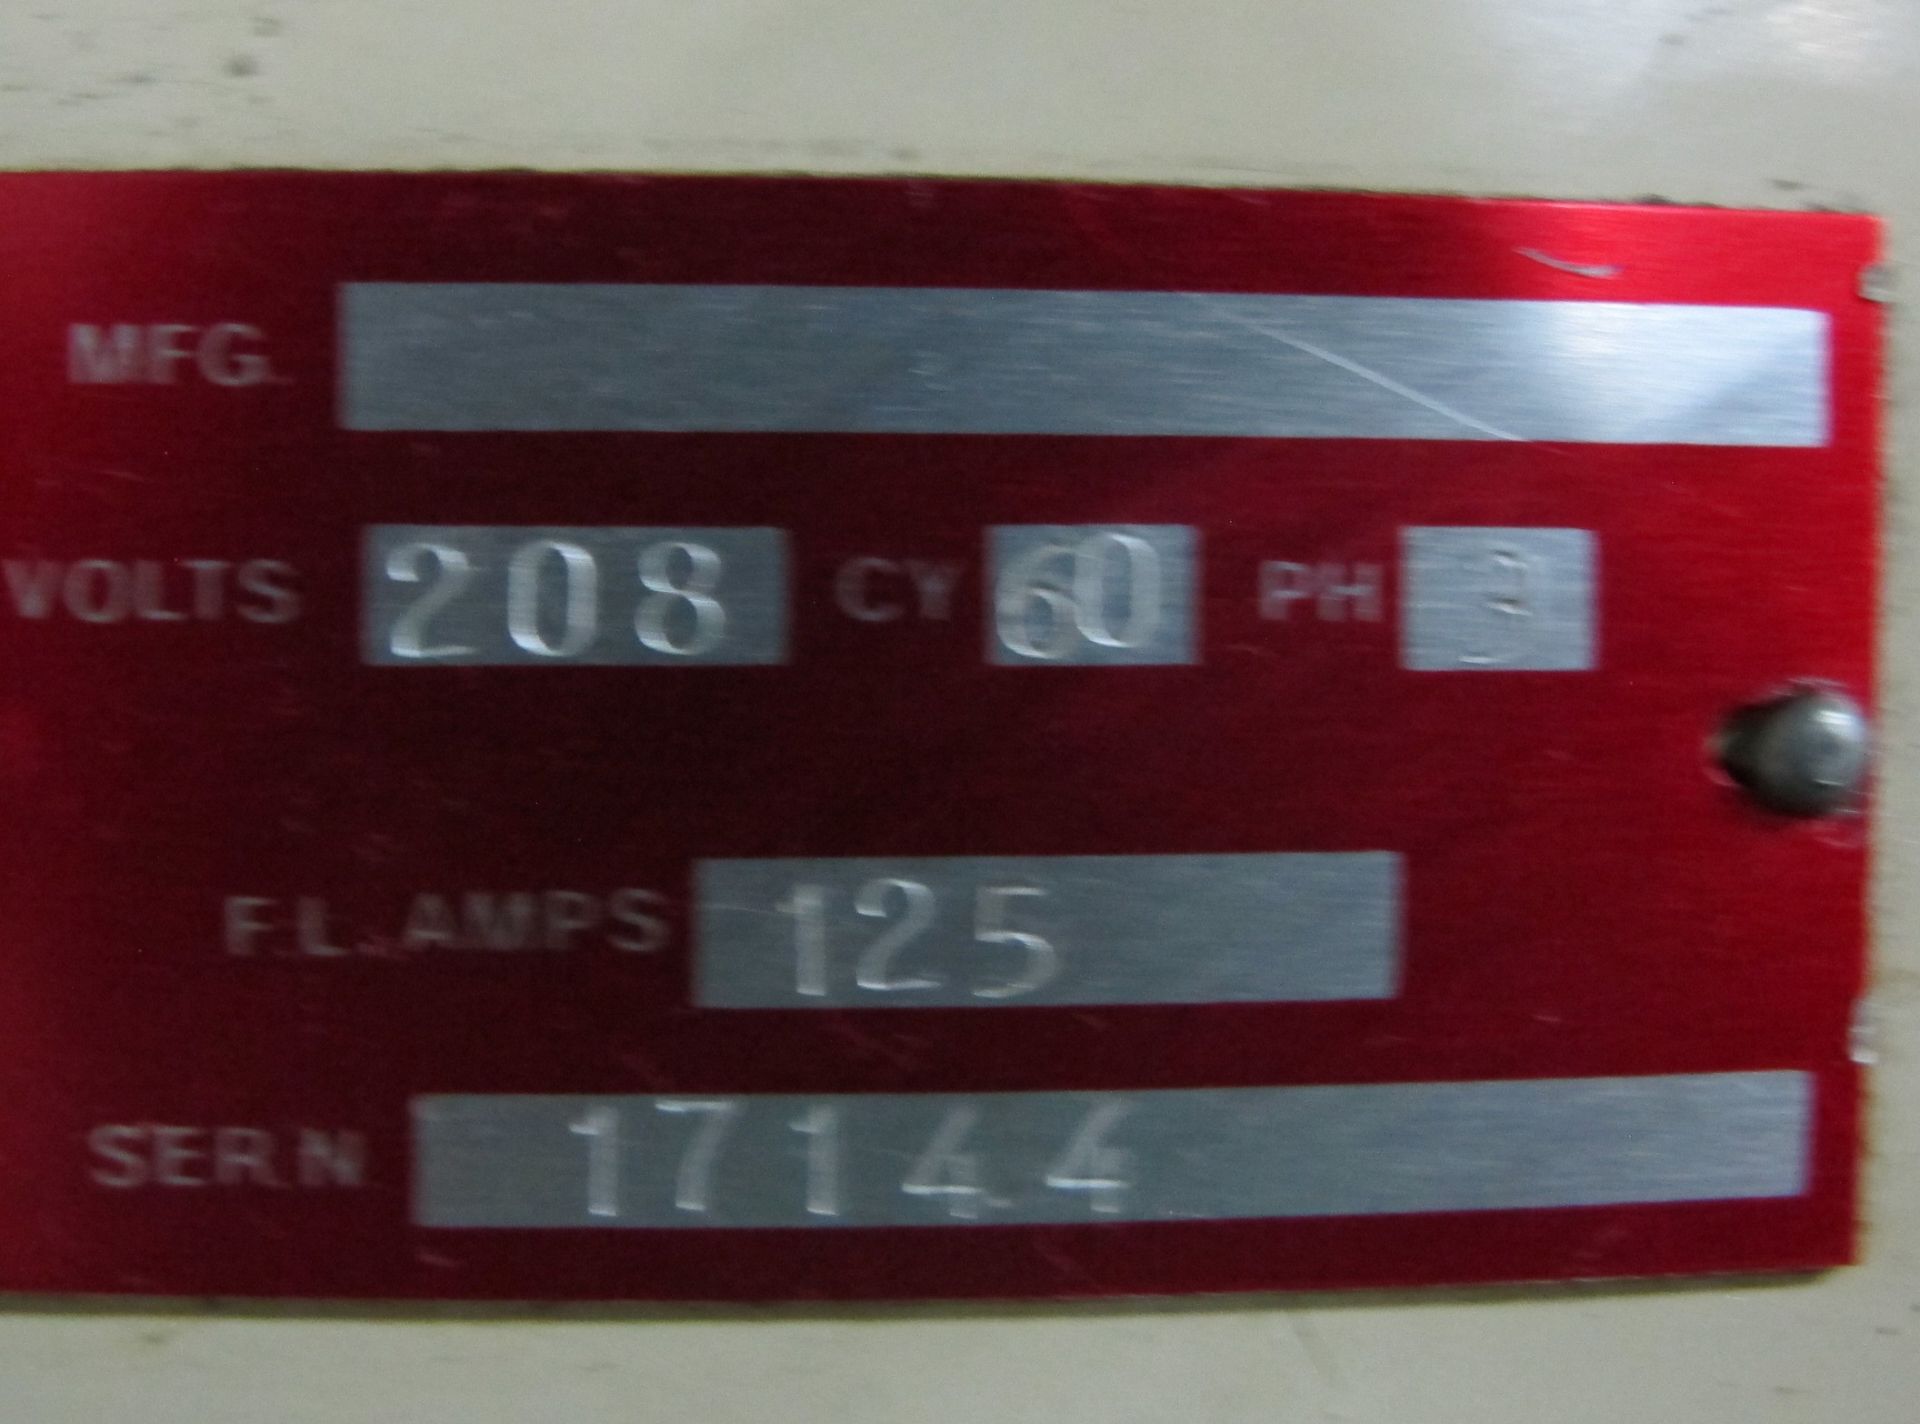 OKUMA & HOWA MODEL MILLAC 7VA CNC VERTICAL MACHINING CENTER, FANUC 11M CNC CONTROL, 31.5” X 79” - Image 13 of 16